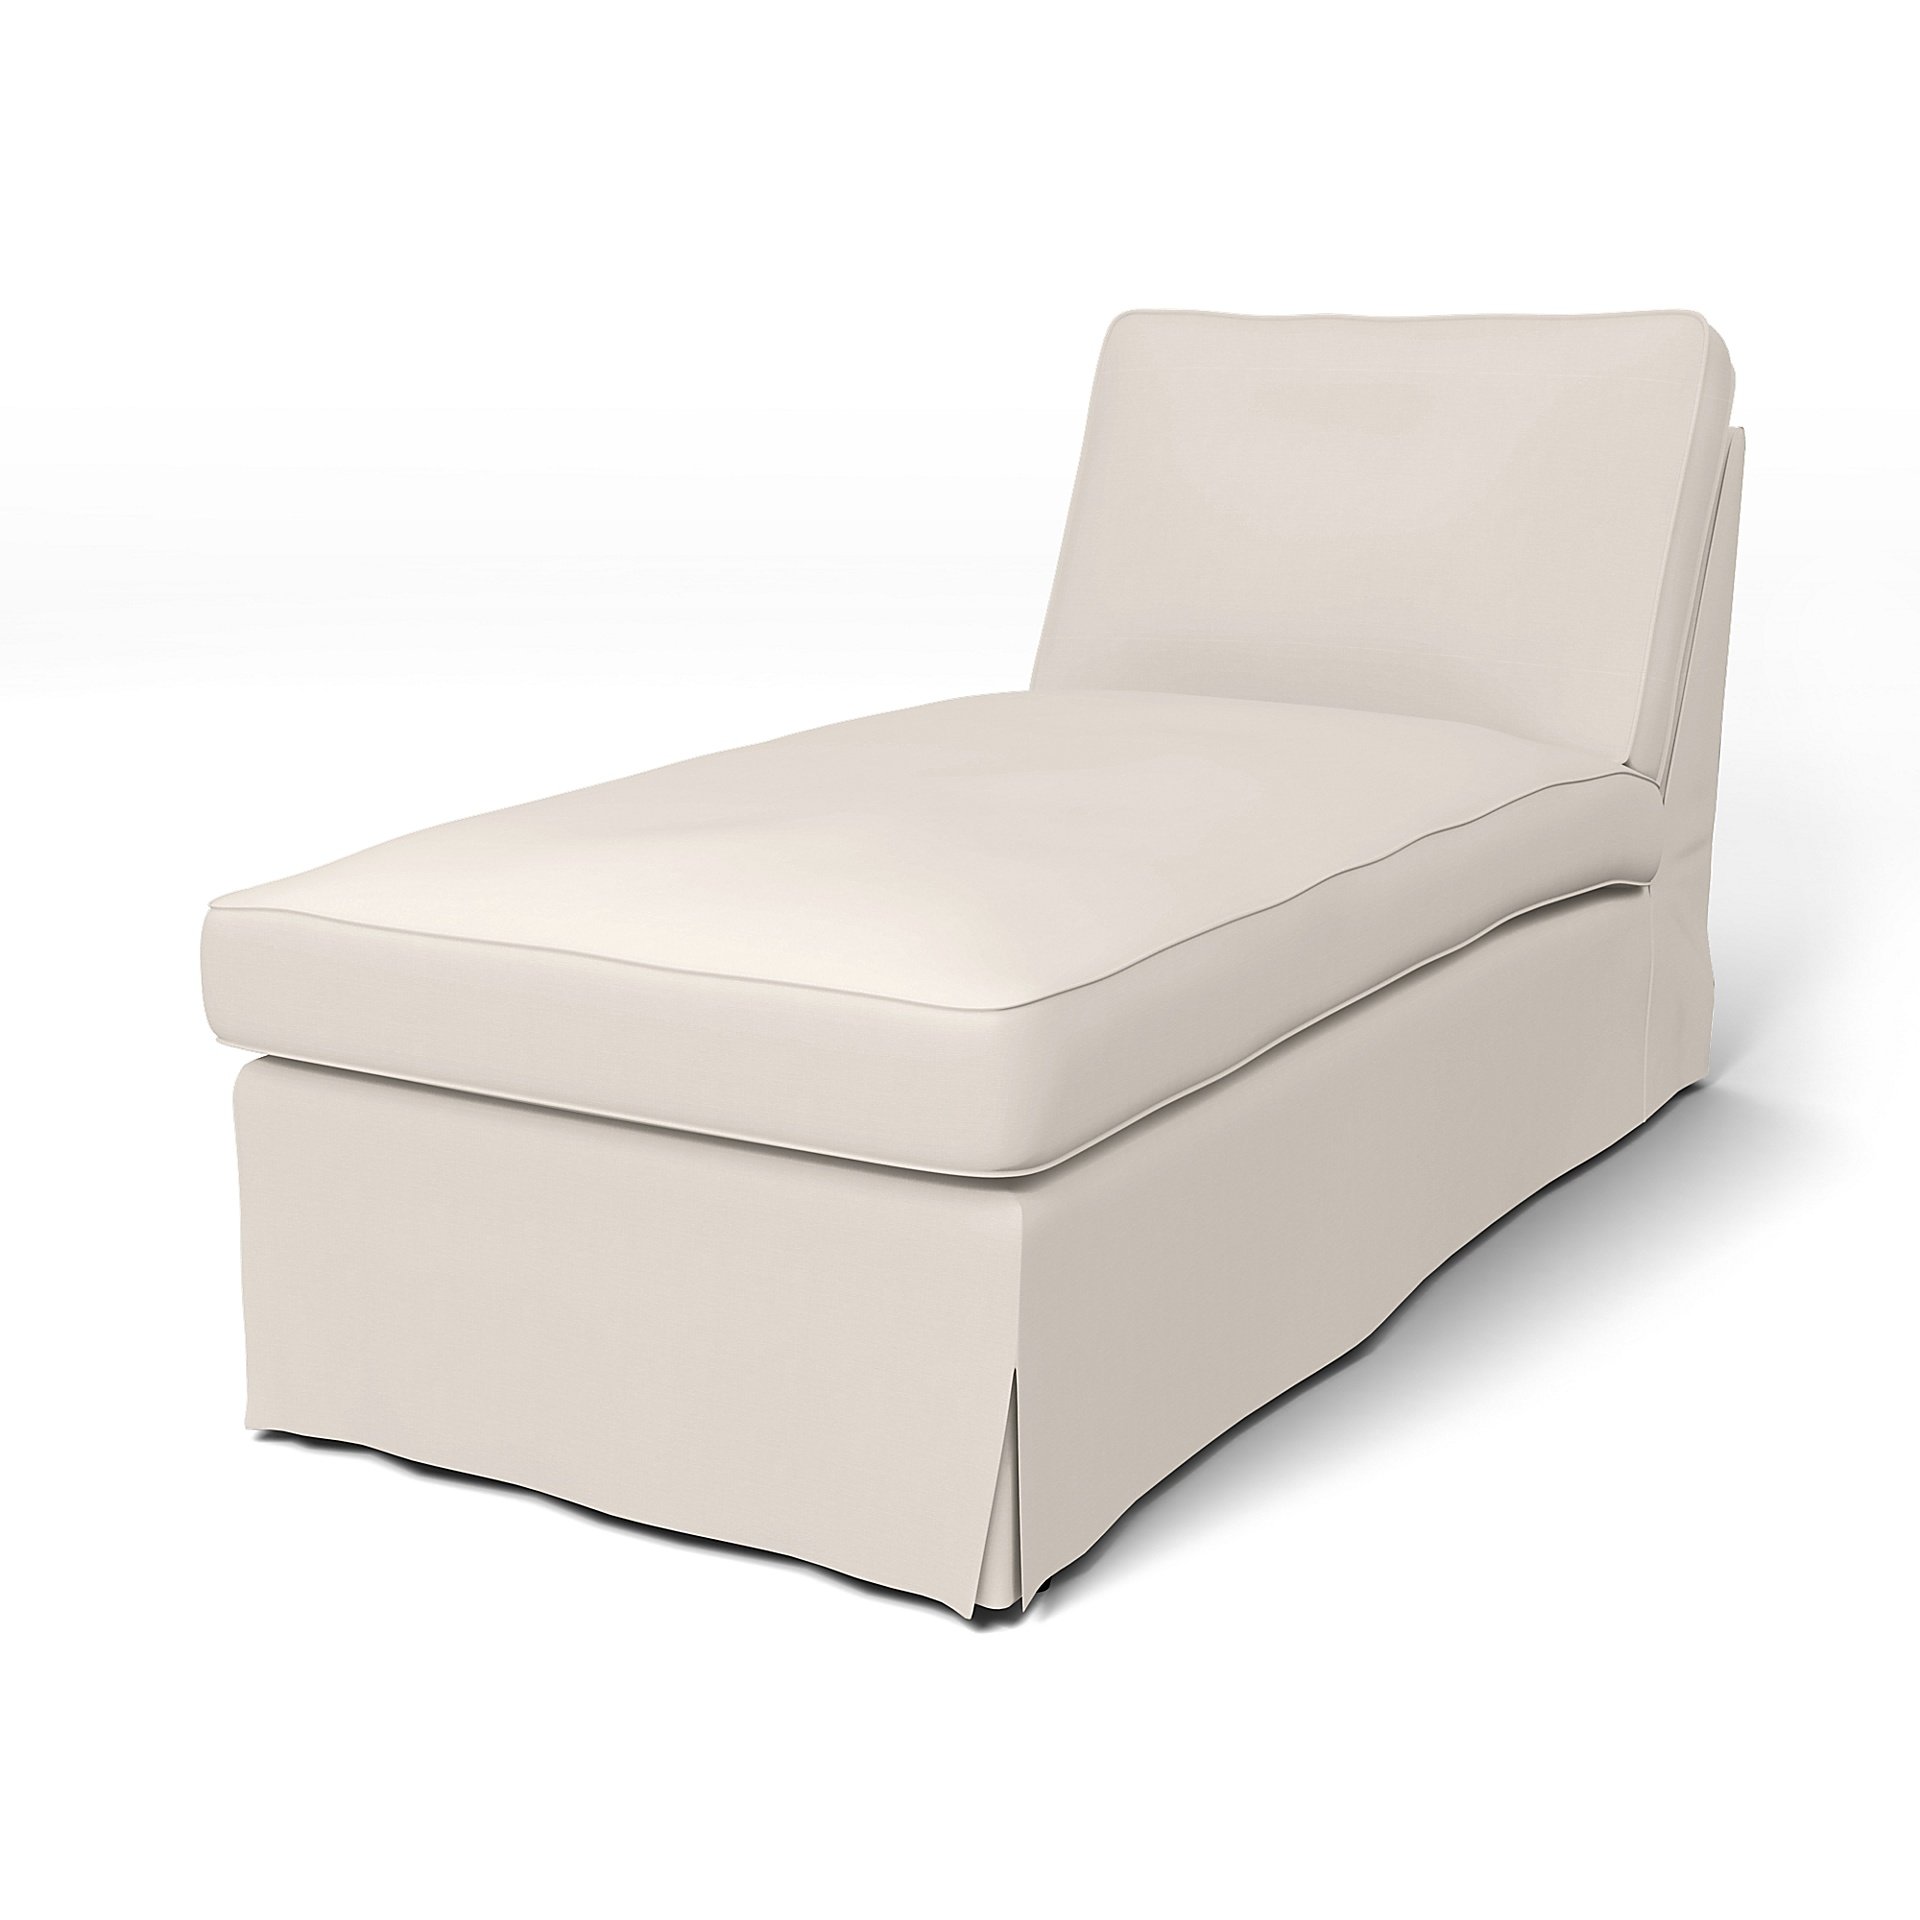 IKEA - Ektorp Chaise Longue Cover, Soft White, Cotton - Bemz